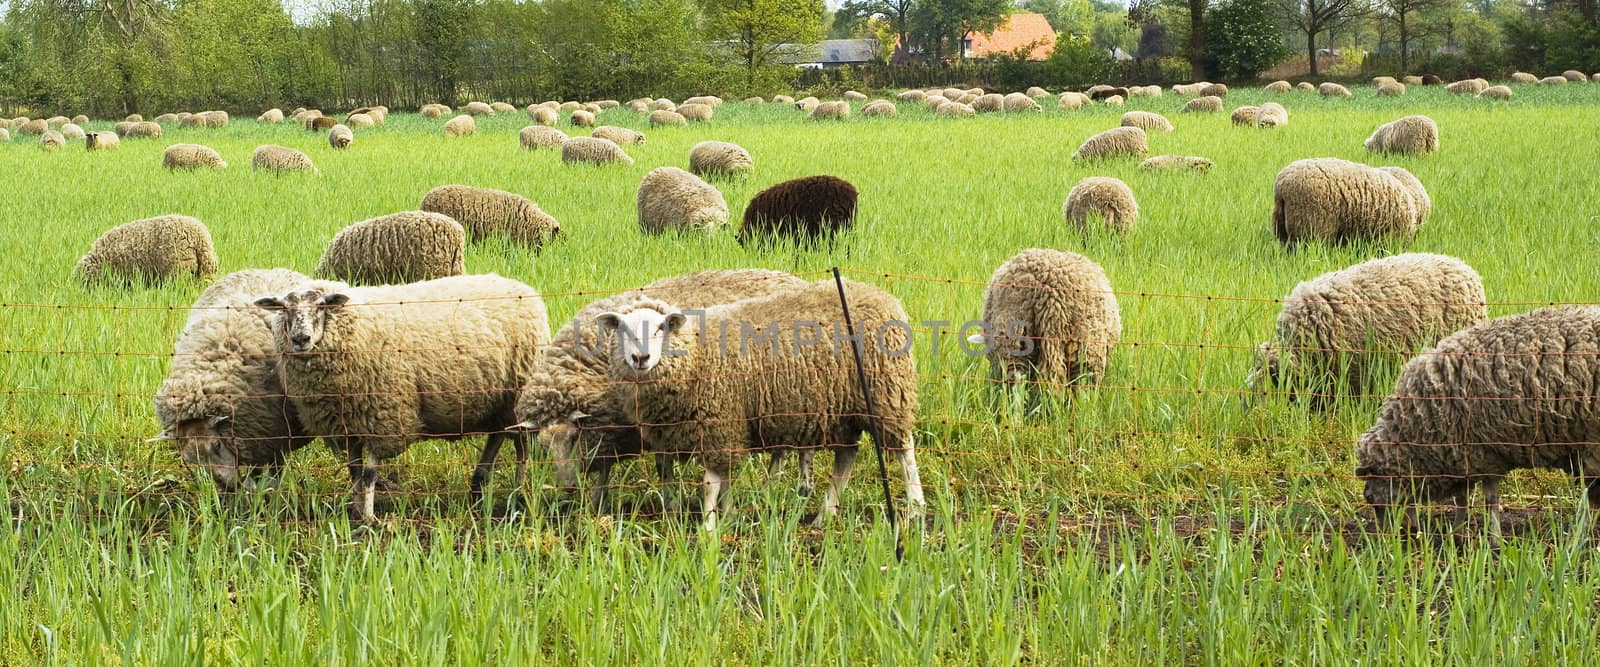 Grazing sheep. by SasPartout